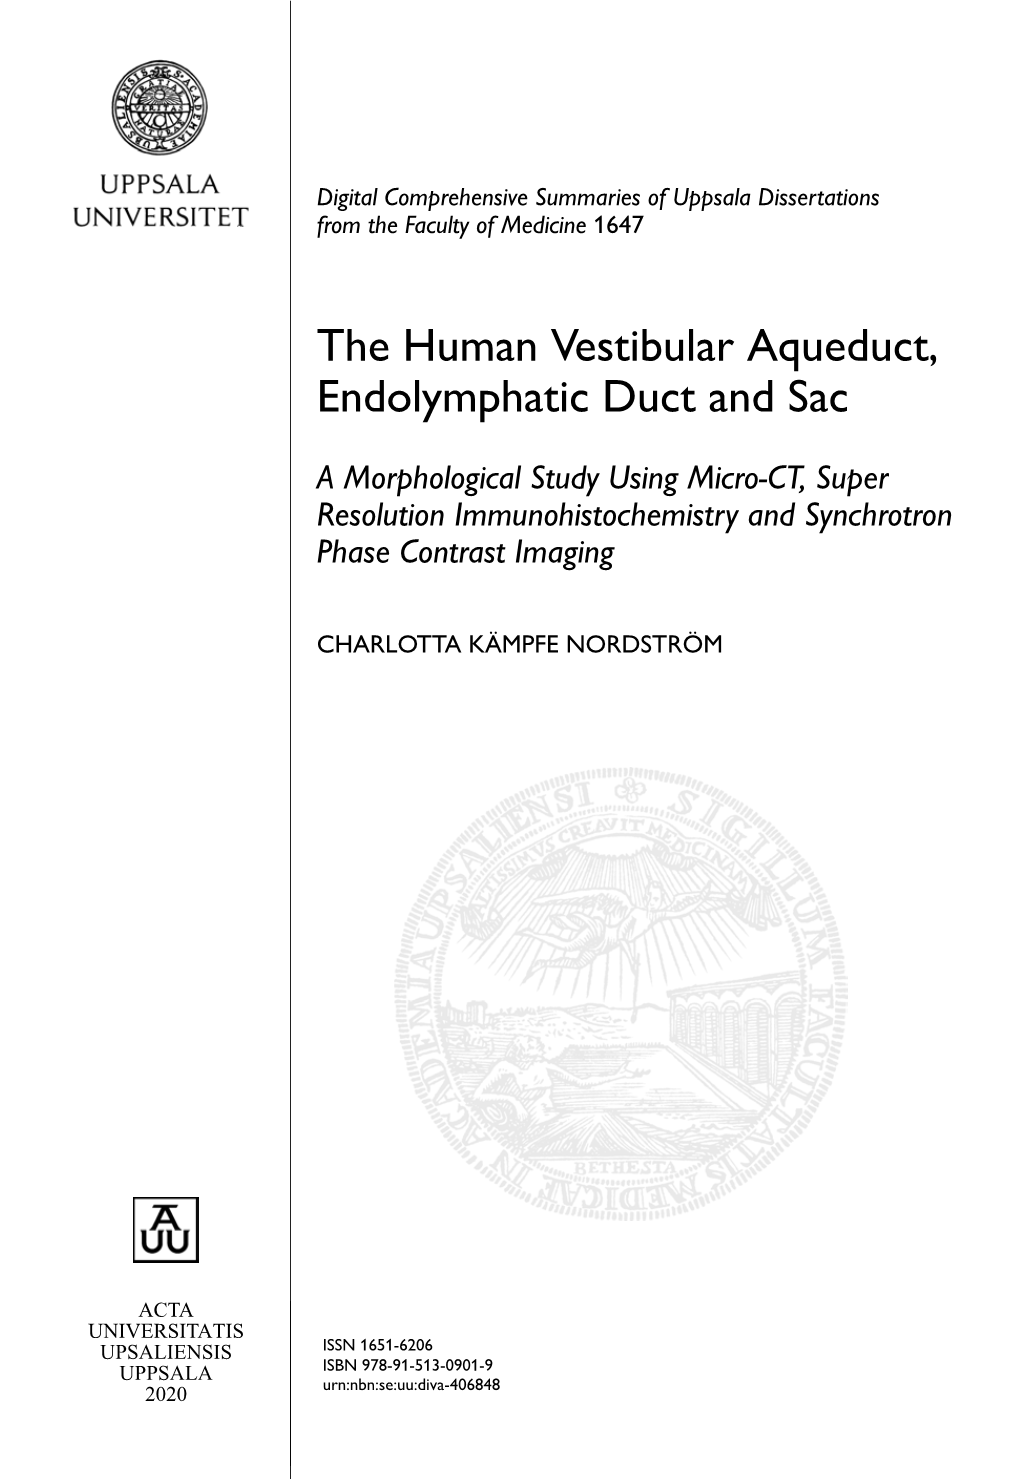 The Human Vestibular Aqueduct, Endolymphatic Duct and Sac